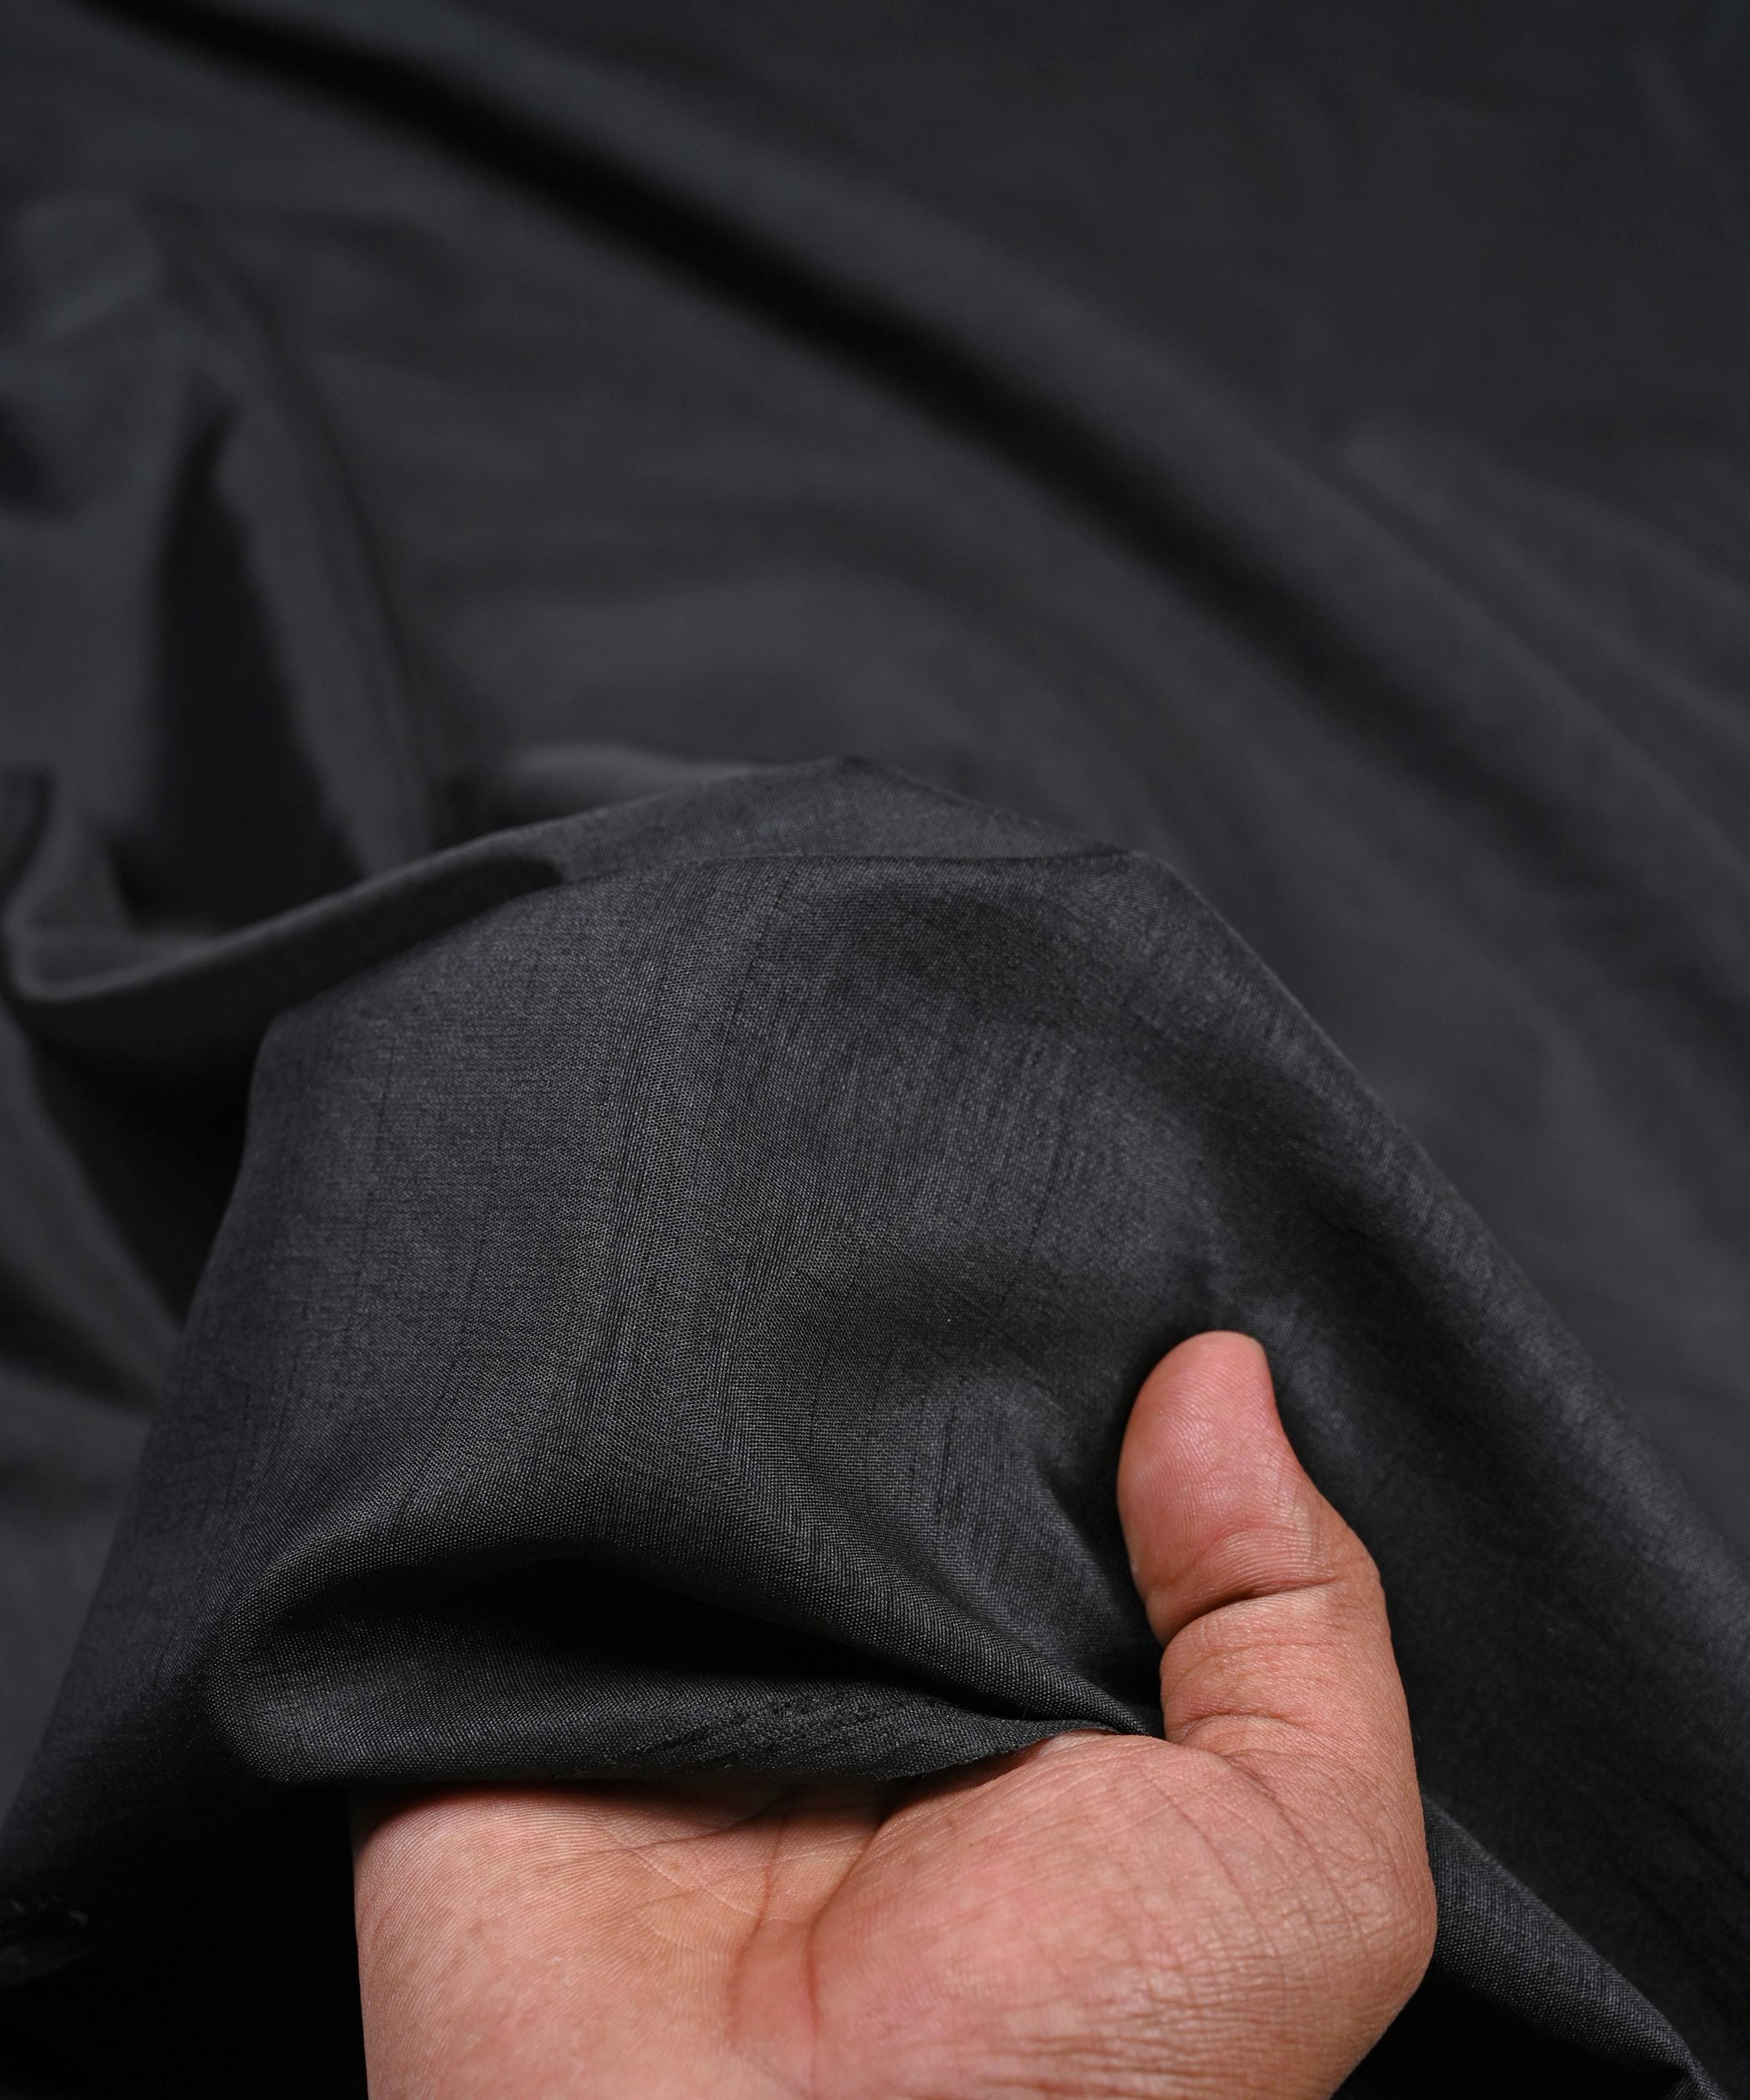 Black Plain Dyed Sana Silk Fabric